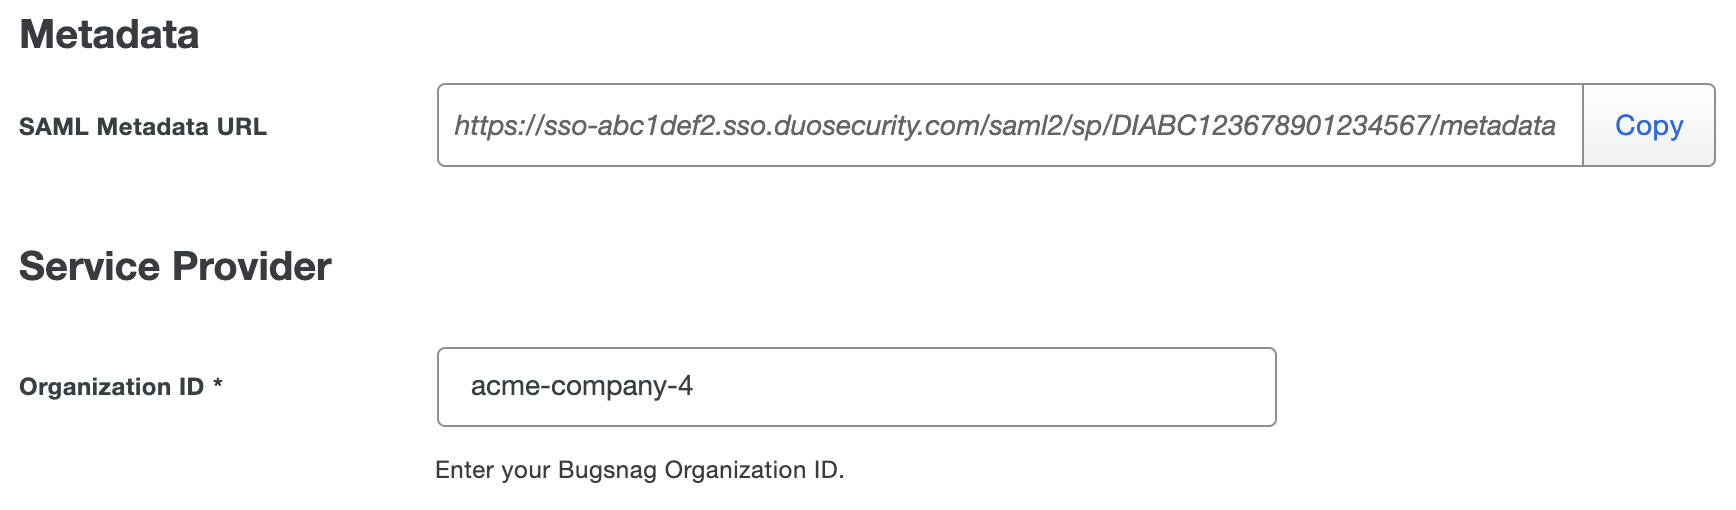 Duo BugSnag Metadata URL and Organization ID